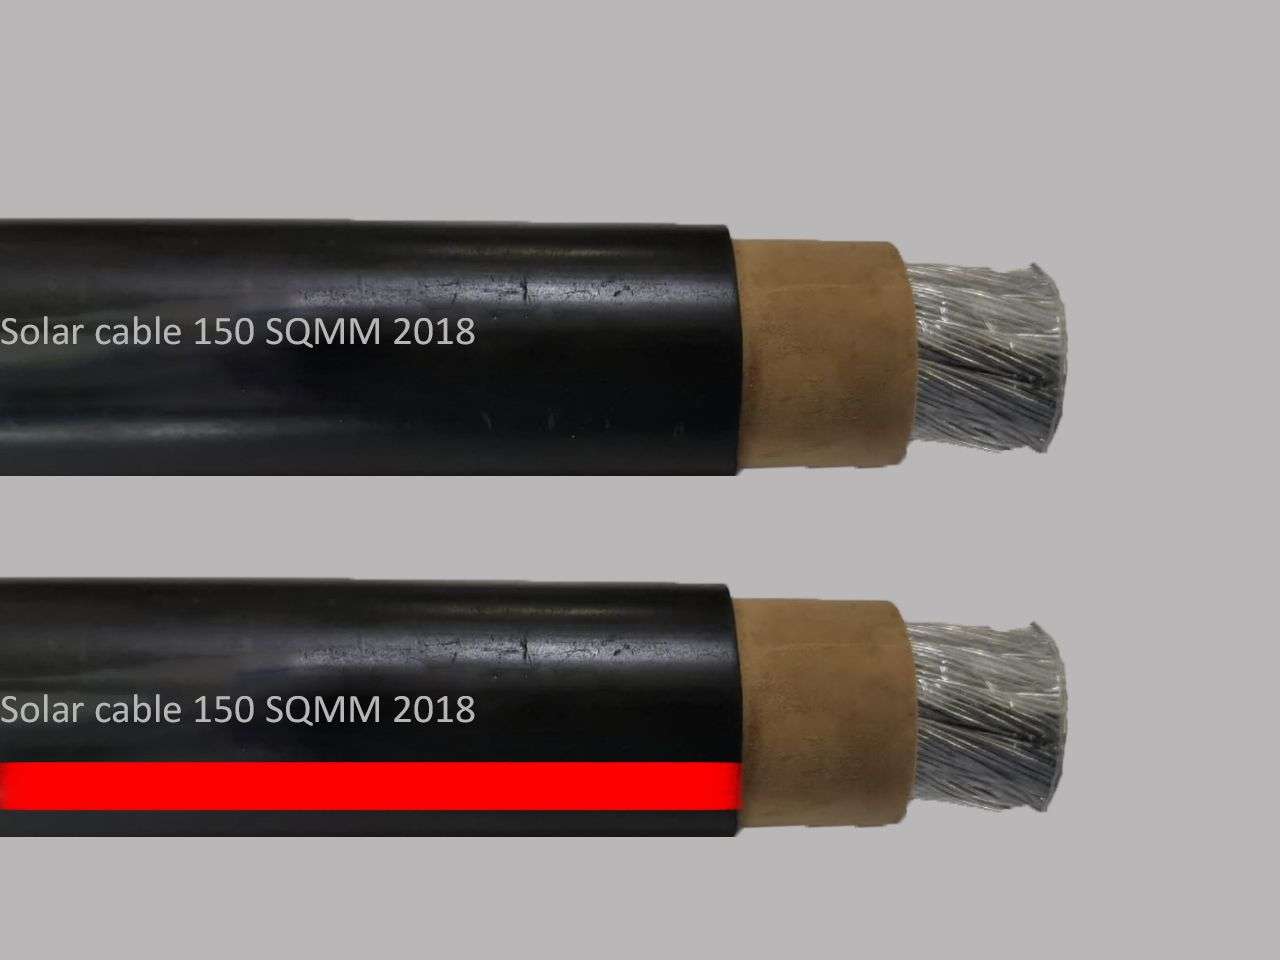 en-certified-dc-solar-cable-150sqm-500mtr-drum-red.jpg